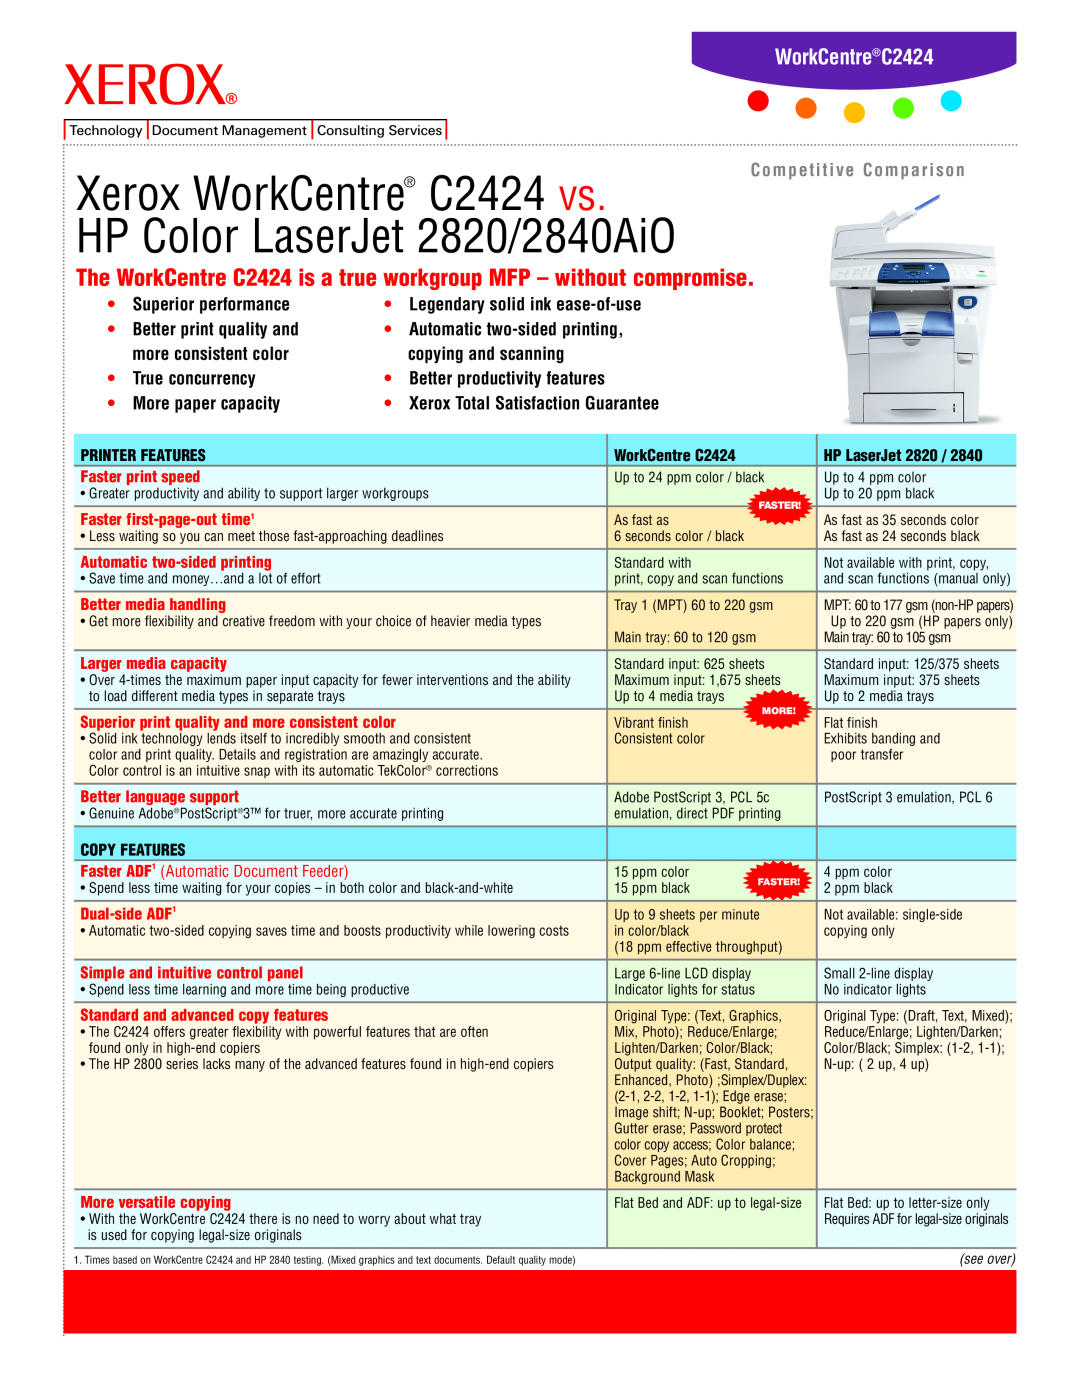 Xerox 2820/2840AiO manual WorkCentreC2424, Competitive Comparison, Printer Features, WorkCentre C2424, HP LaserJet 